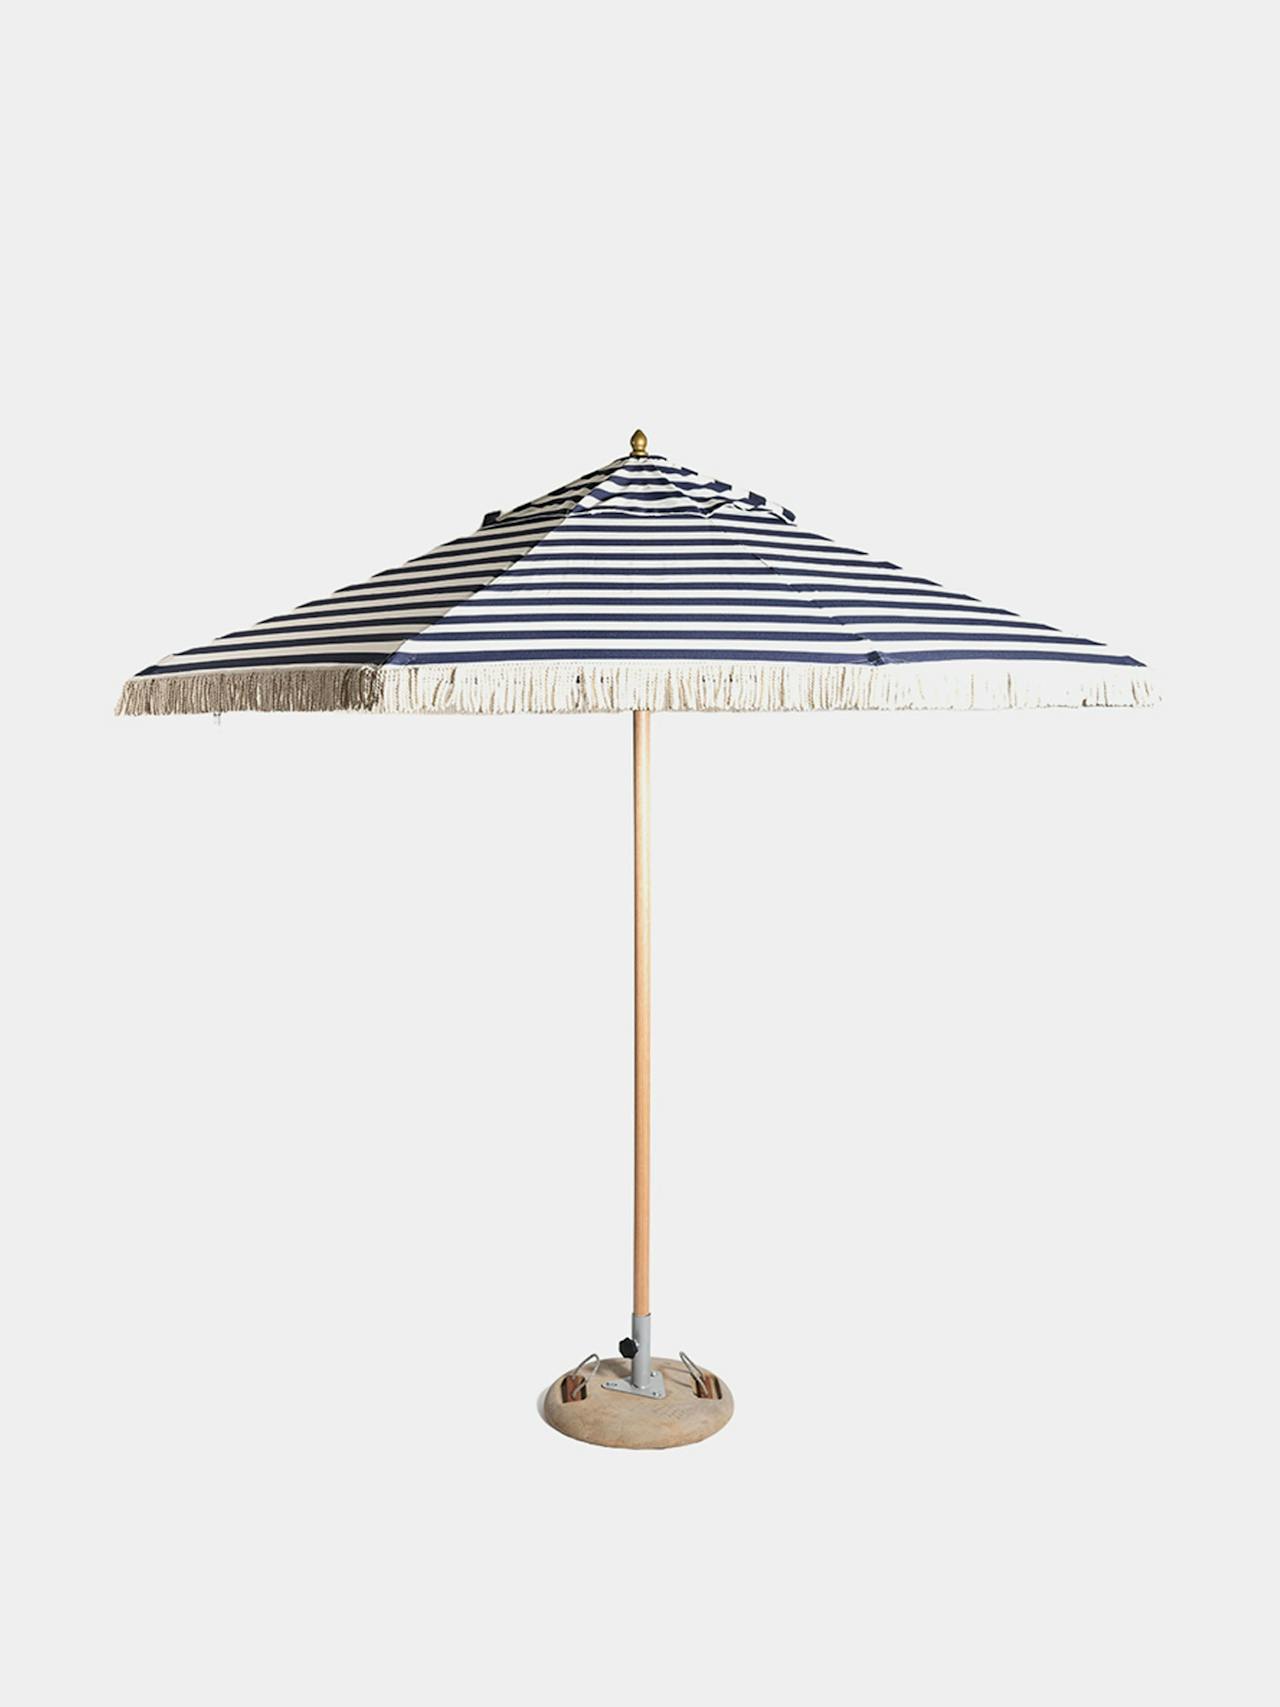 Sun parasol with tassels in navy stripe, 300cm